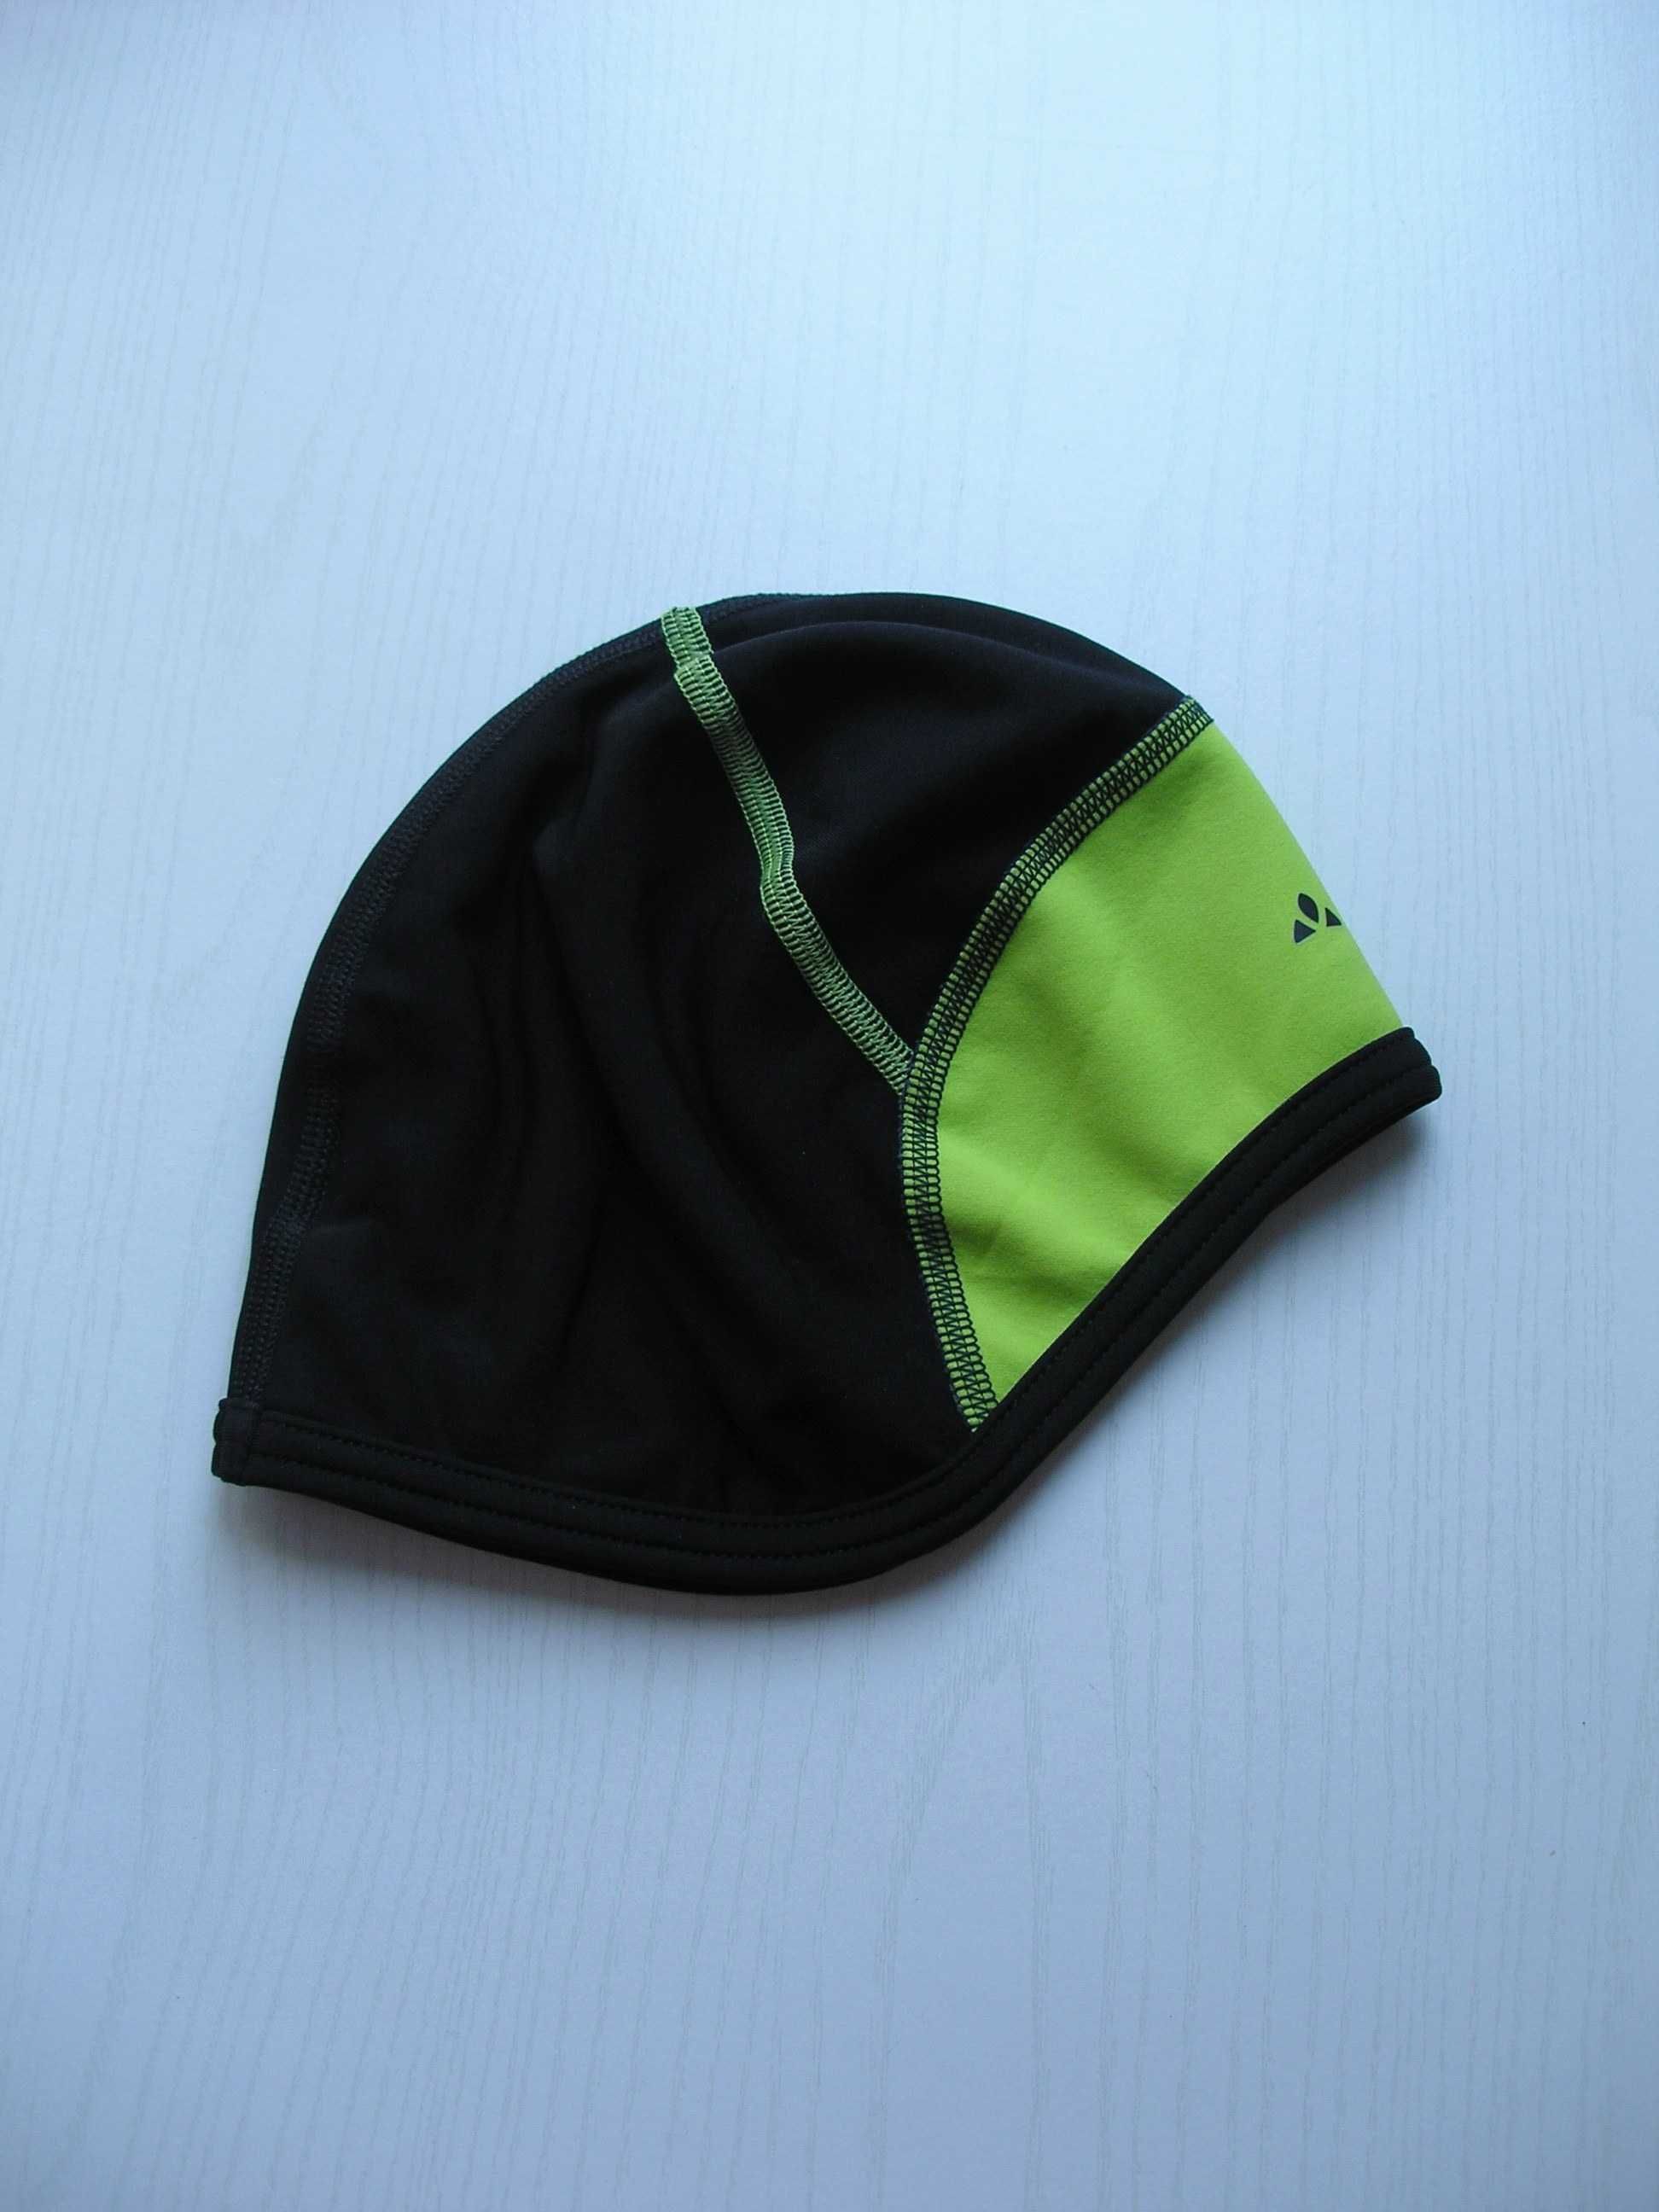 Спортивная шапка унисекс Vaude bike cap 03279 размер S на микрофлисе